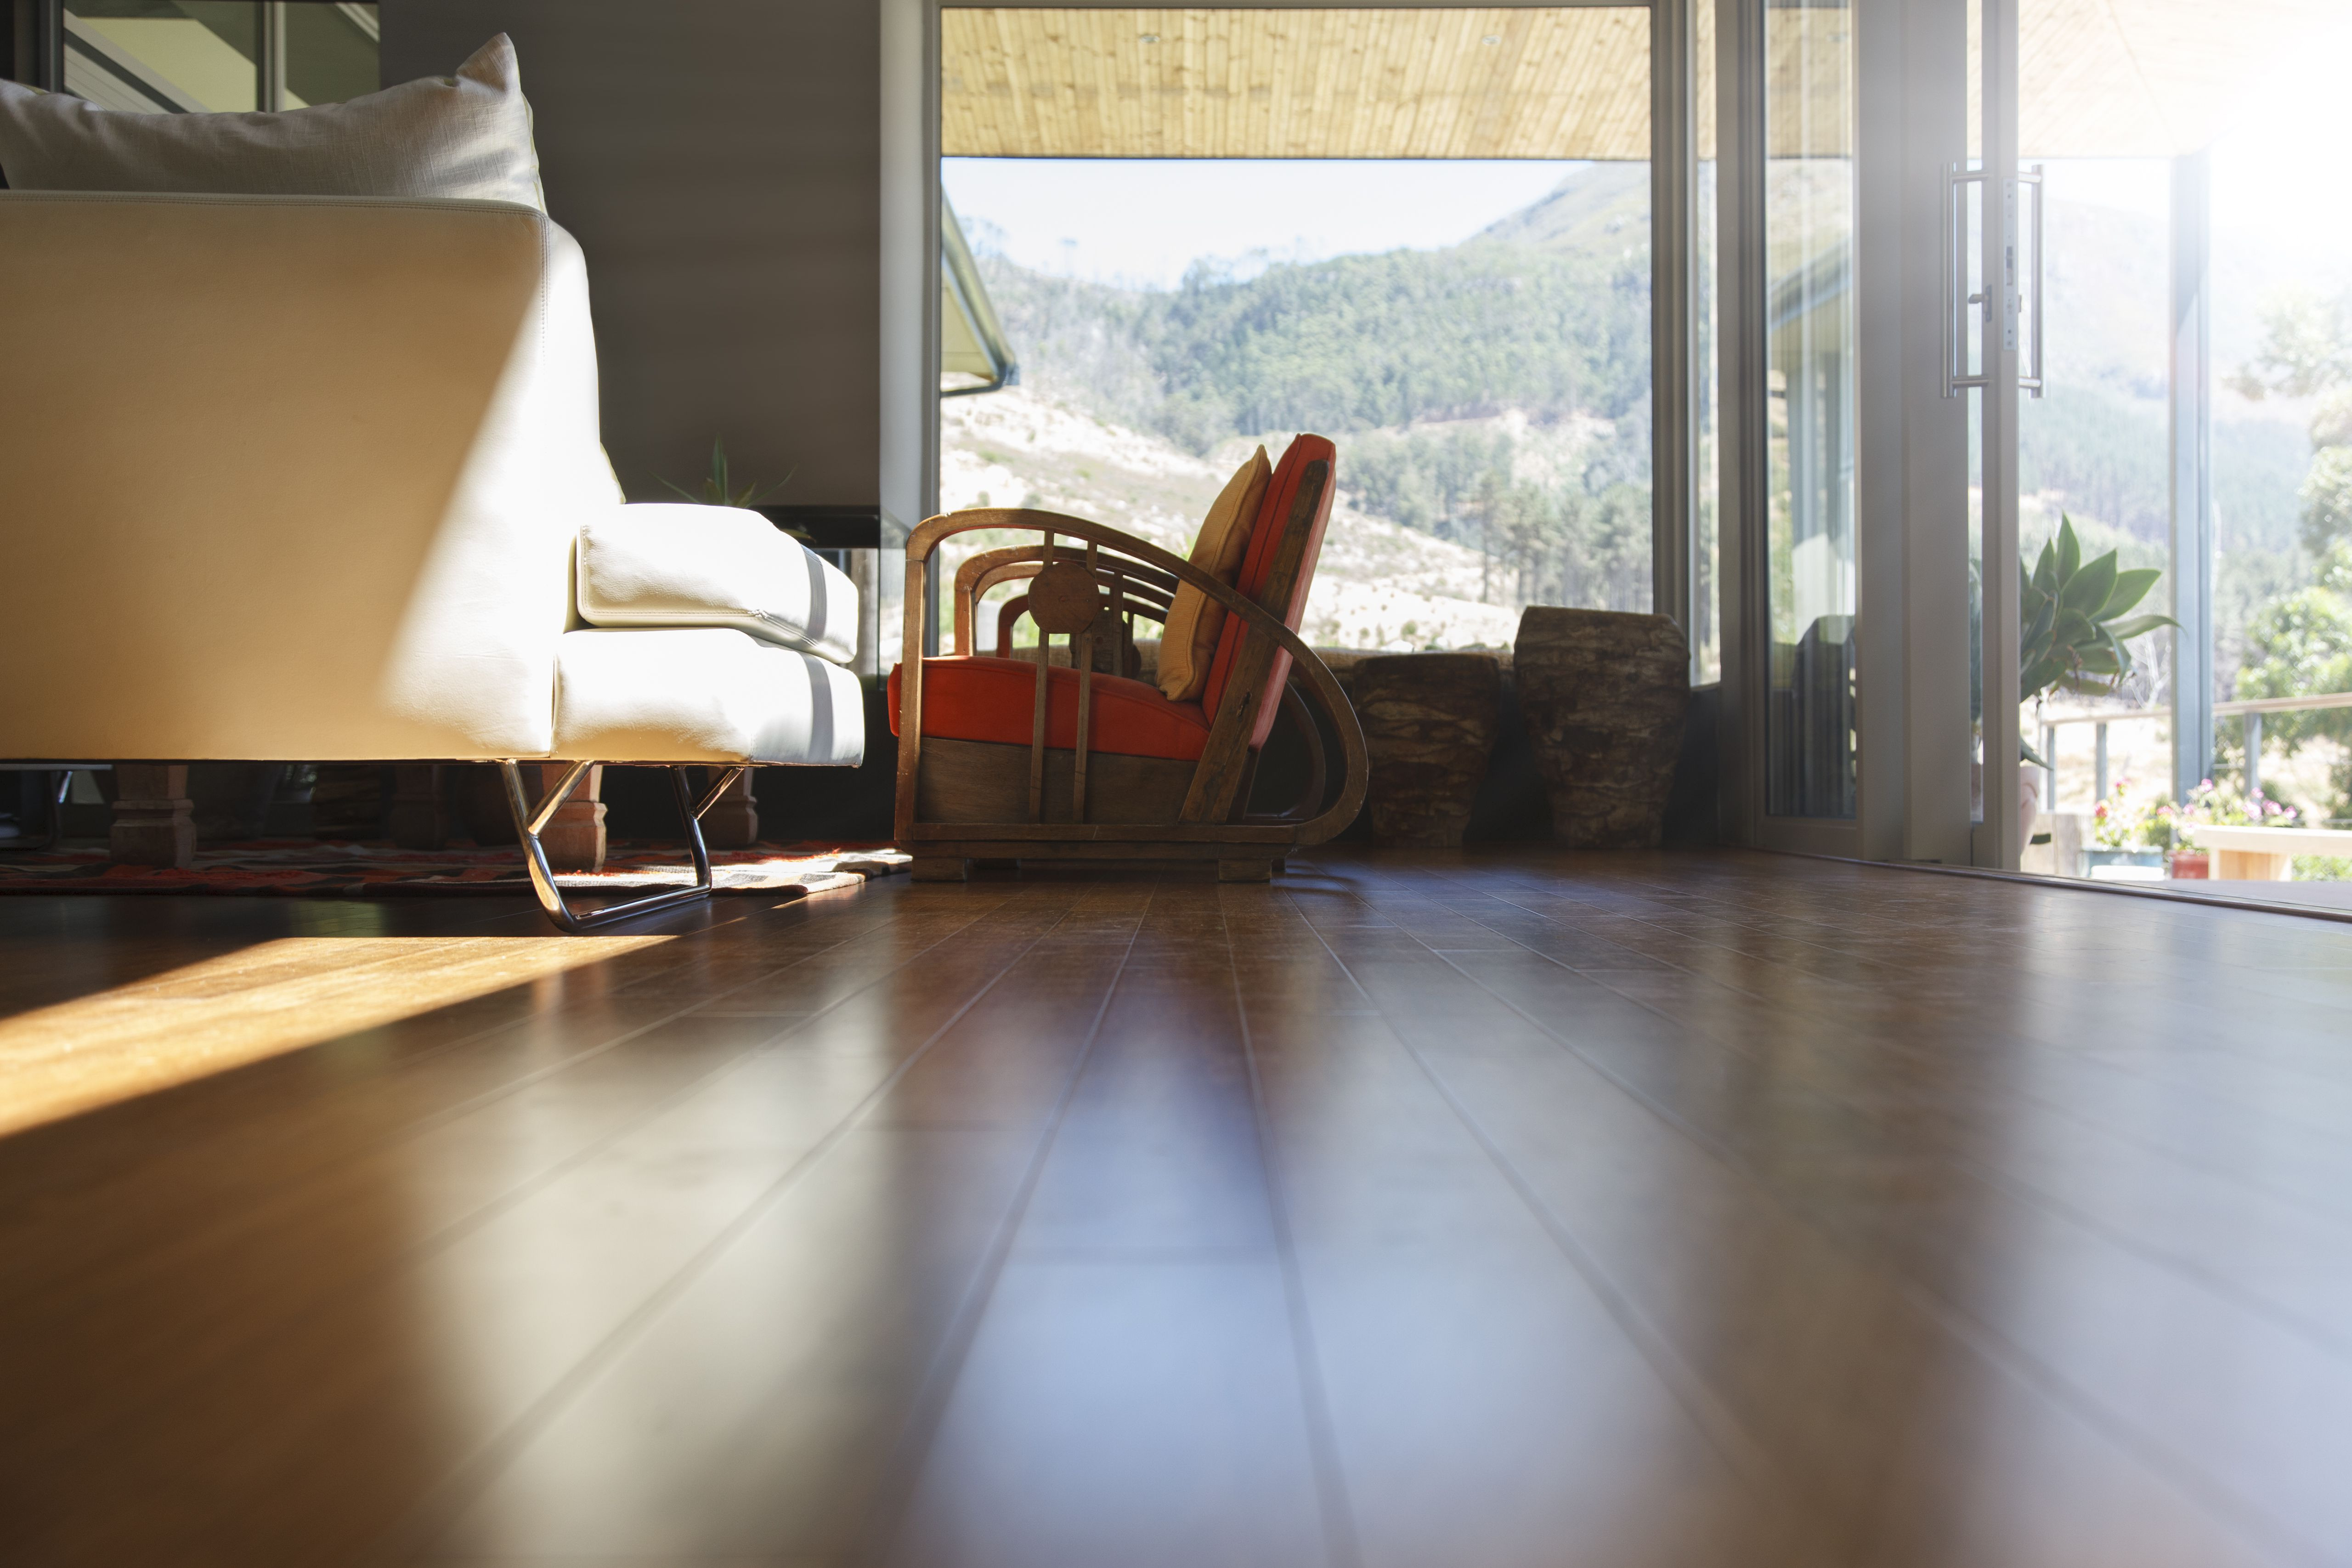 hardwood vs bamboo vs cork flooring of types of engineered flooring from premium hardwoods pertaining to living room interior hard wood floor and sofa 525439899 5a764f241d64040037603c15